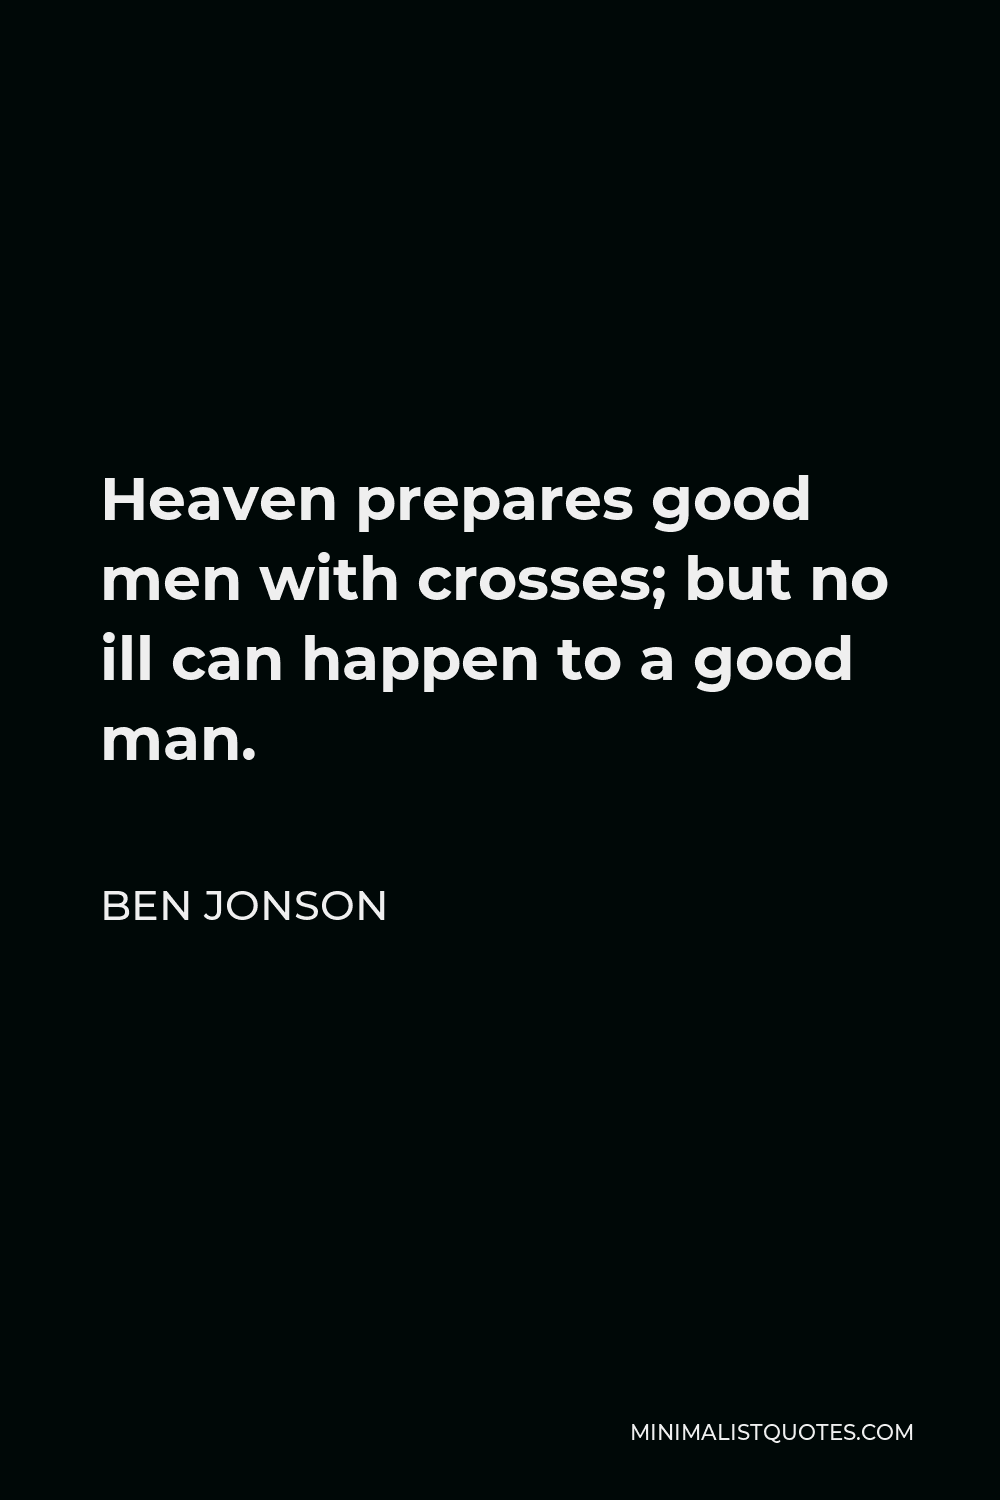 Ben Jonson Quote - Heaven prepares good men with crosses; but no ill can happen to a good man.